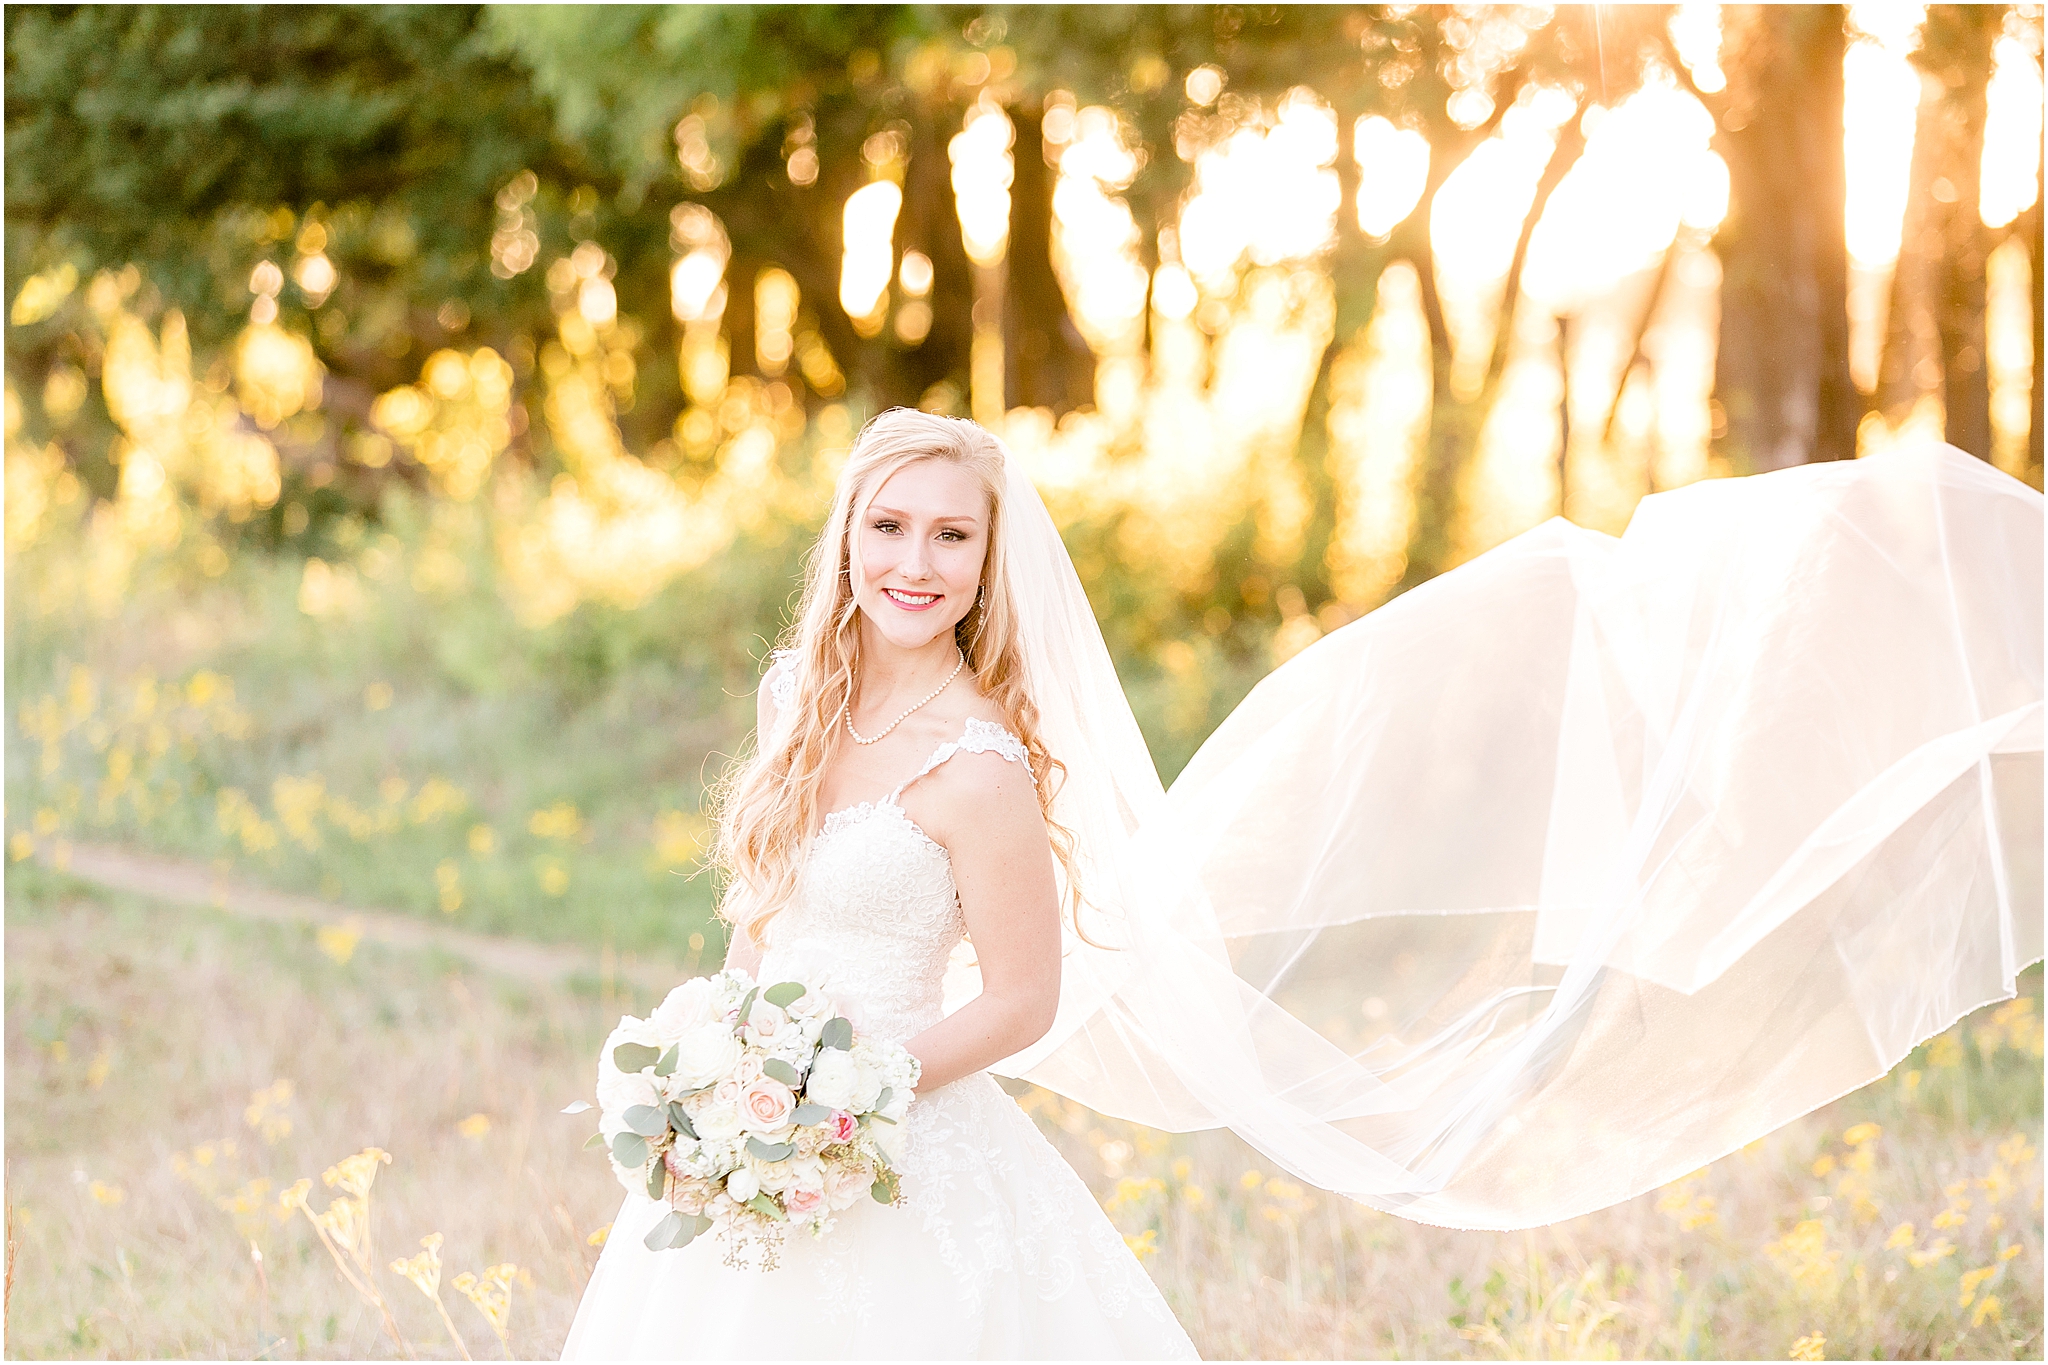 Outdoor bridal session by Dallas Wedding Photographer Jillian Hogan Photography www.jillianhogan.com